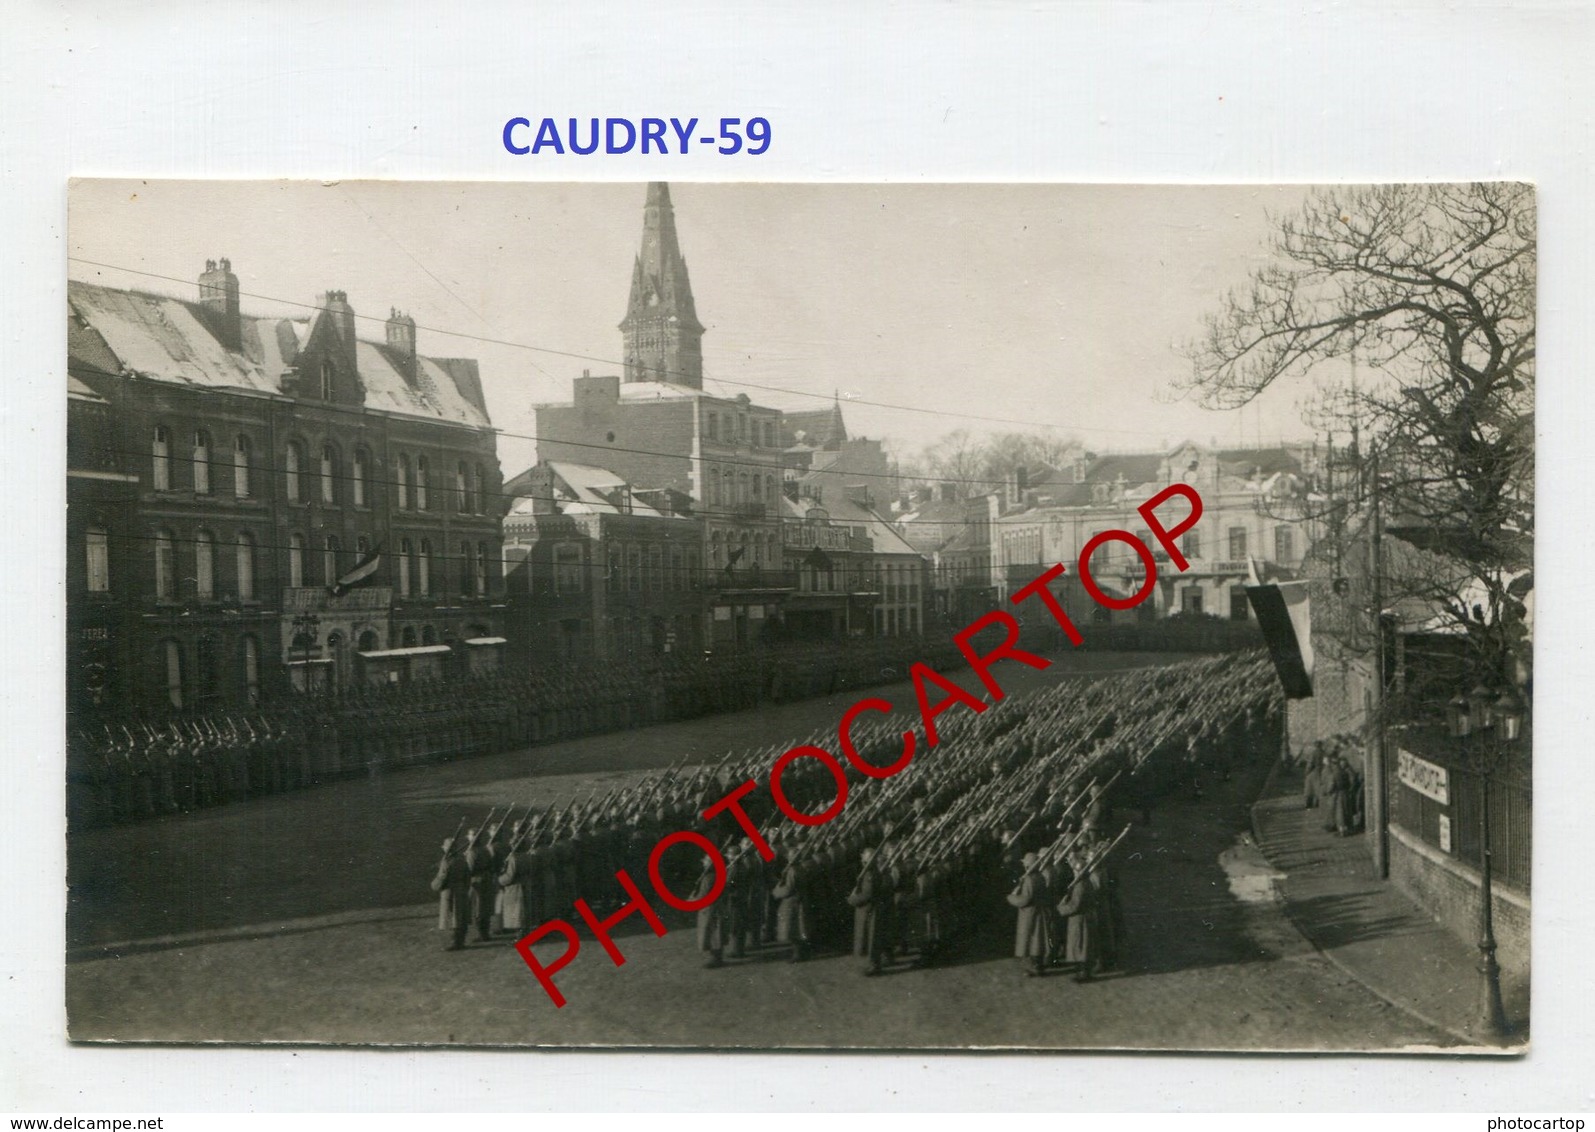 CAUDRY--Parade-Anniversaire Du Kaiser-PHOTO Allemande Comme CP-Guerre14-18-1WK-France-59-Militaria- - Caudry